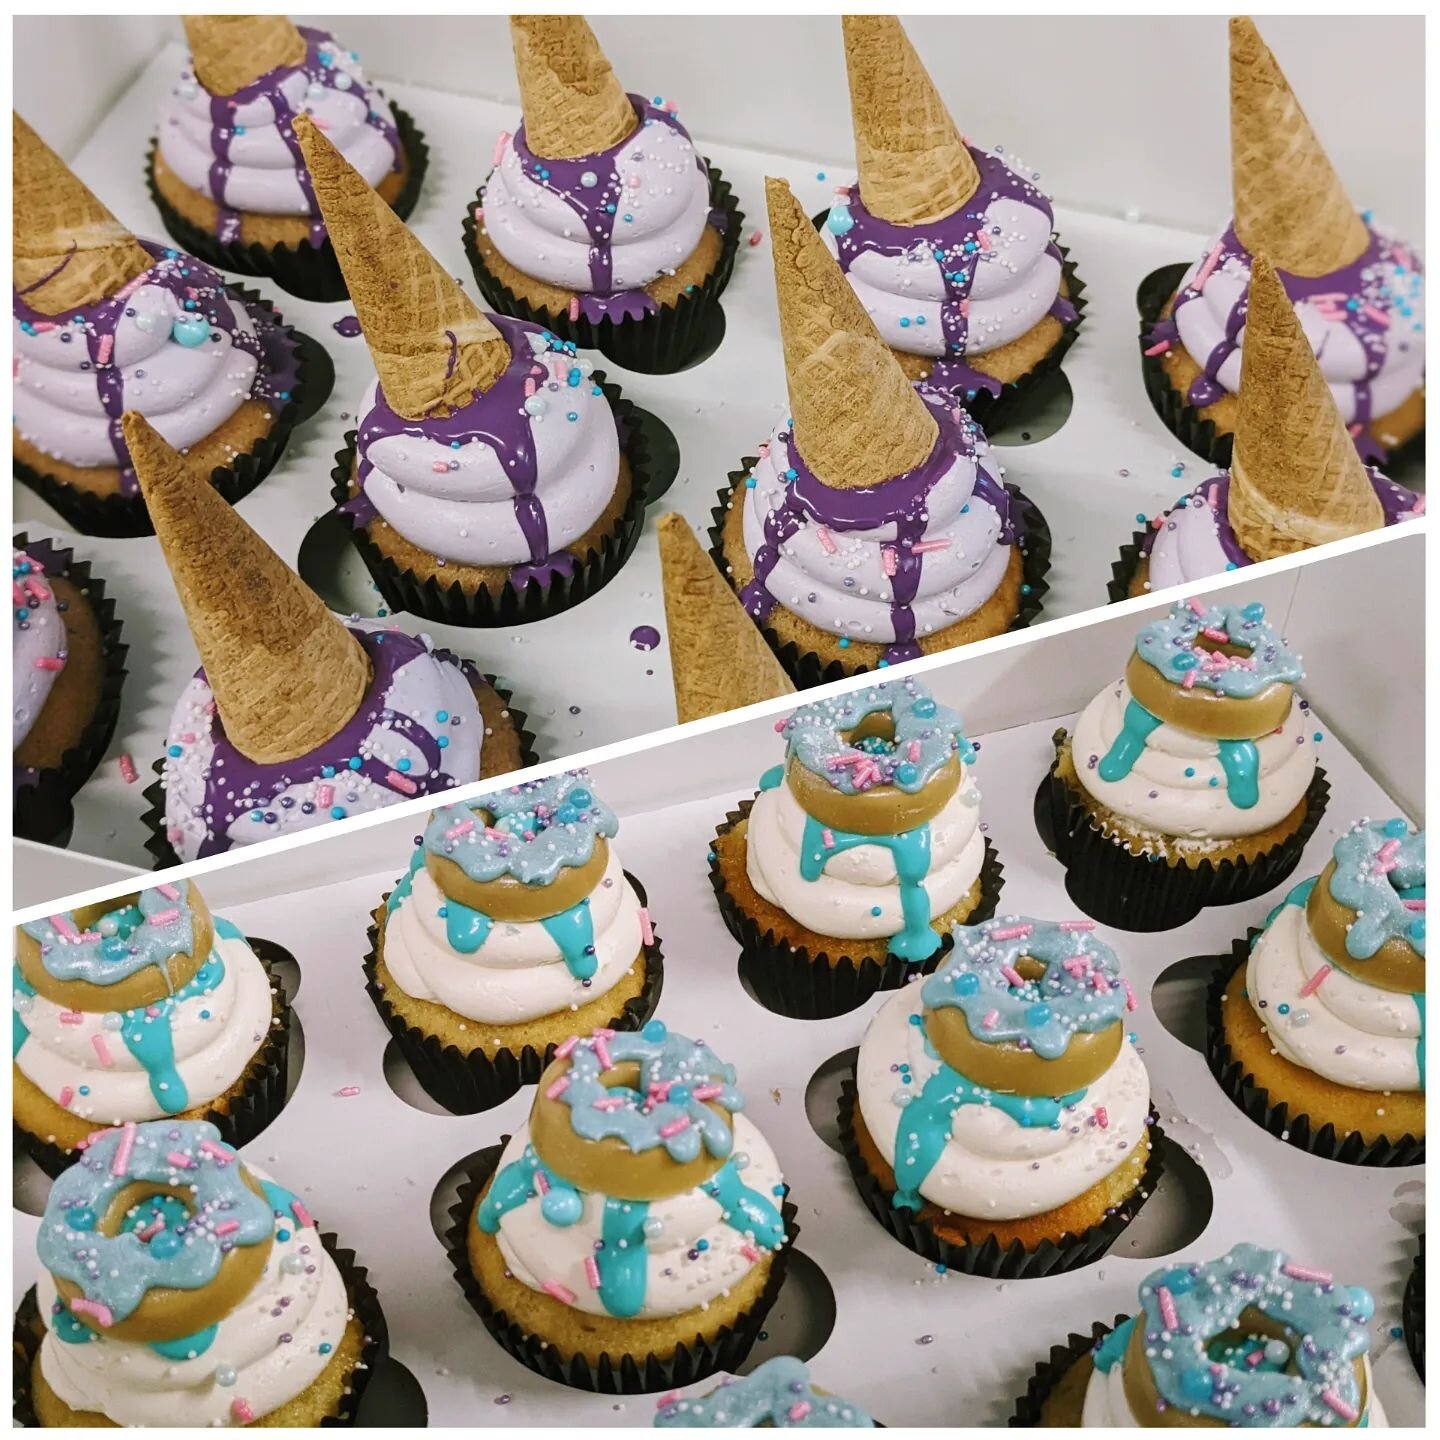 Extra sweet cupcakes!
⠀
Decorator: Amanda